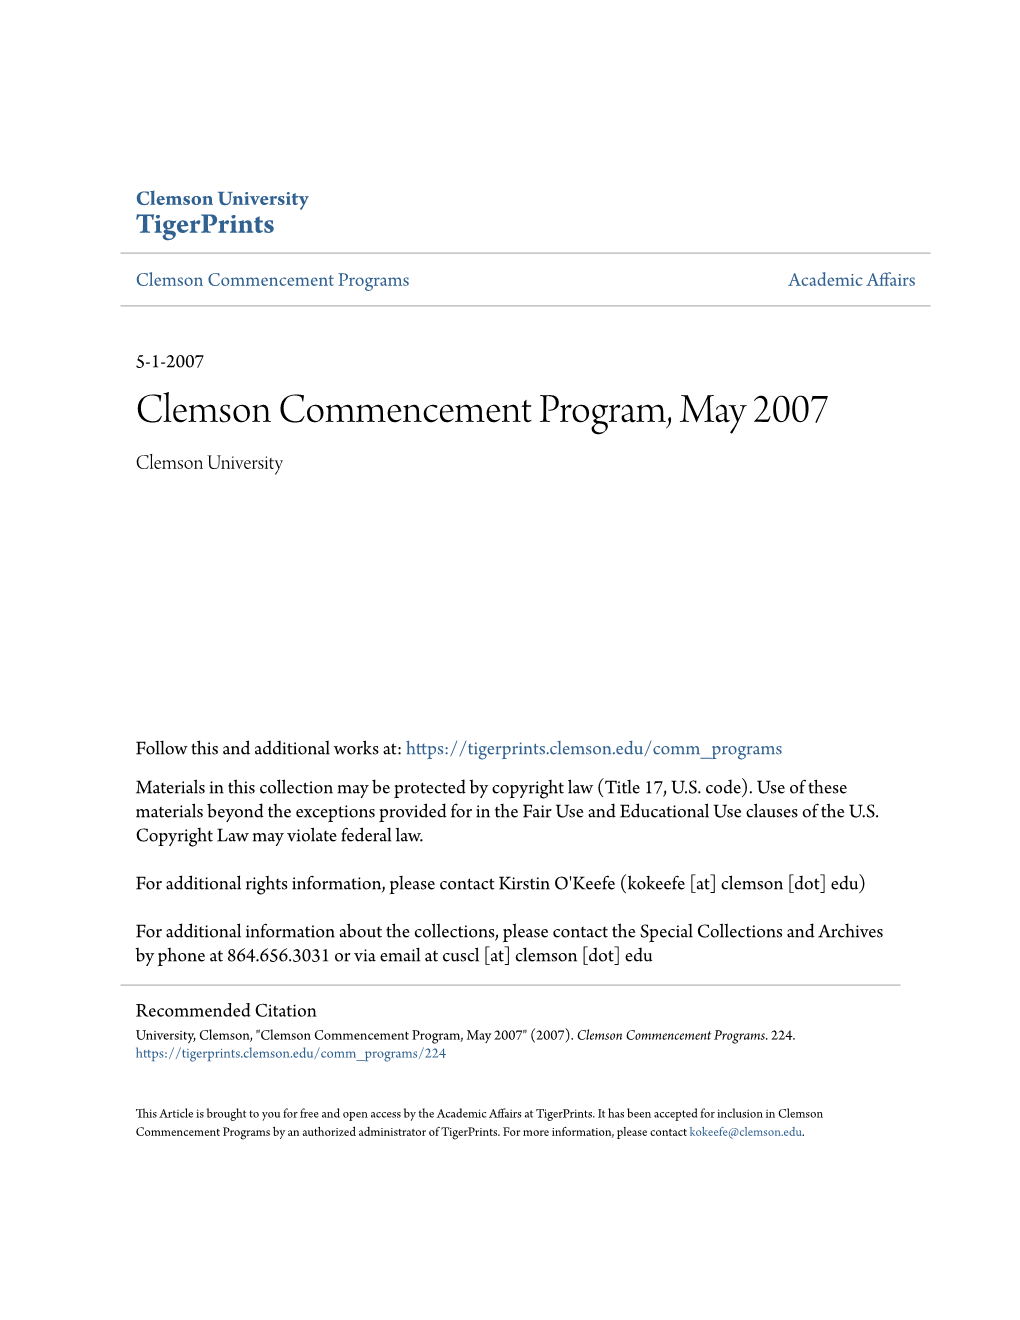 Clemson Commencement Program, May 2007 Clemson University